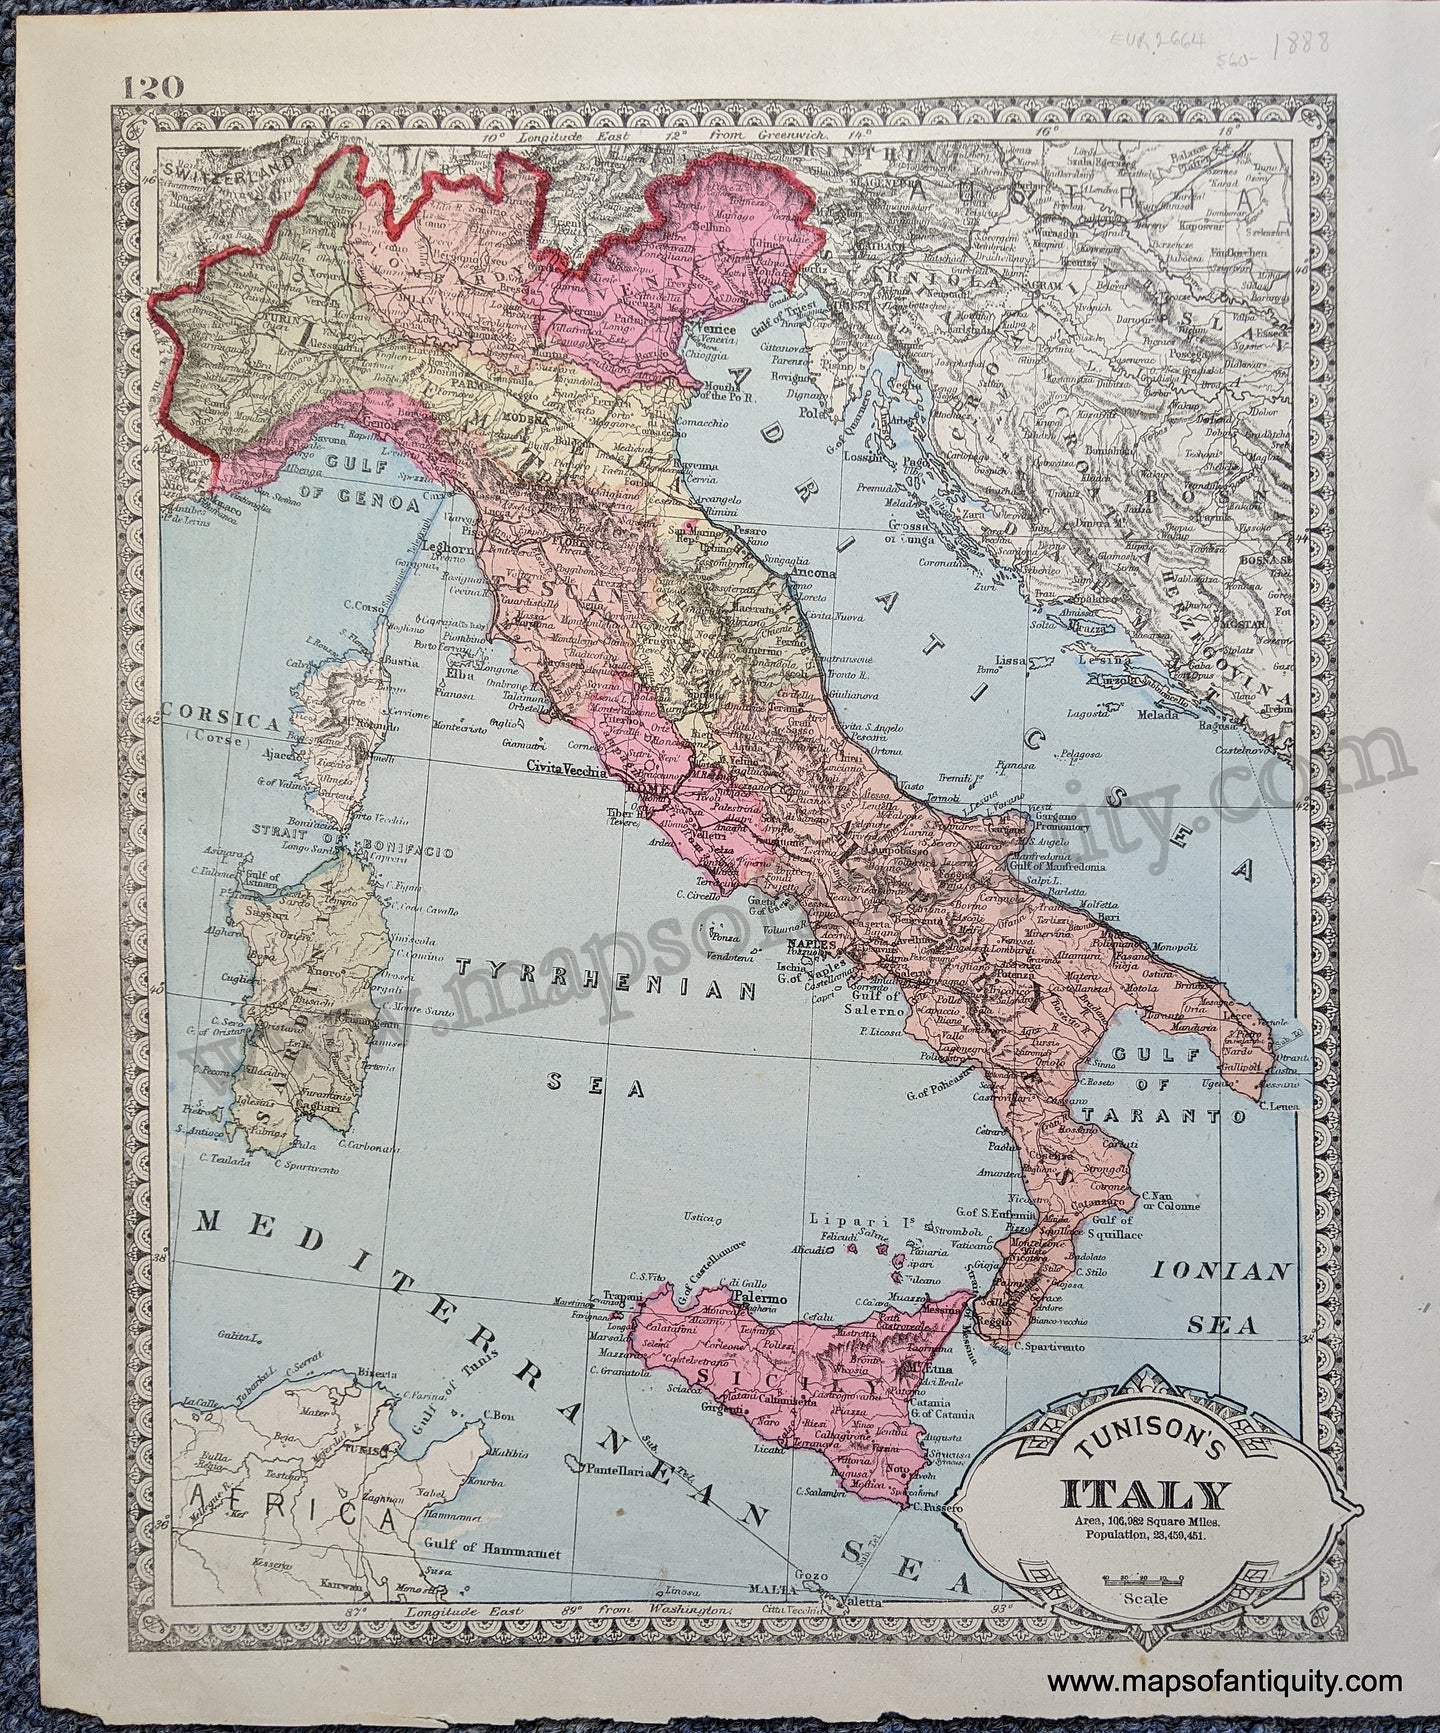 Antique-Map-Tunison's-Italy;-verso:-Tunison's-Austria-Europe--1888-Tunison-Maps-Of-Antiquity-1800s-19th-century